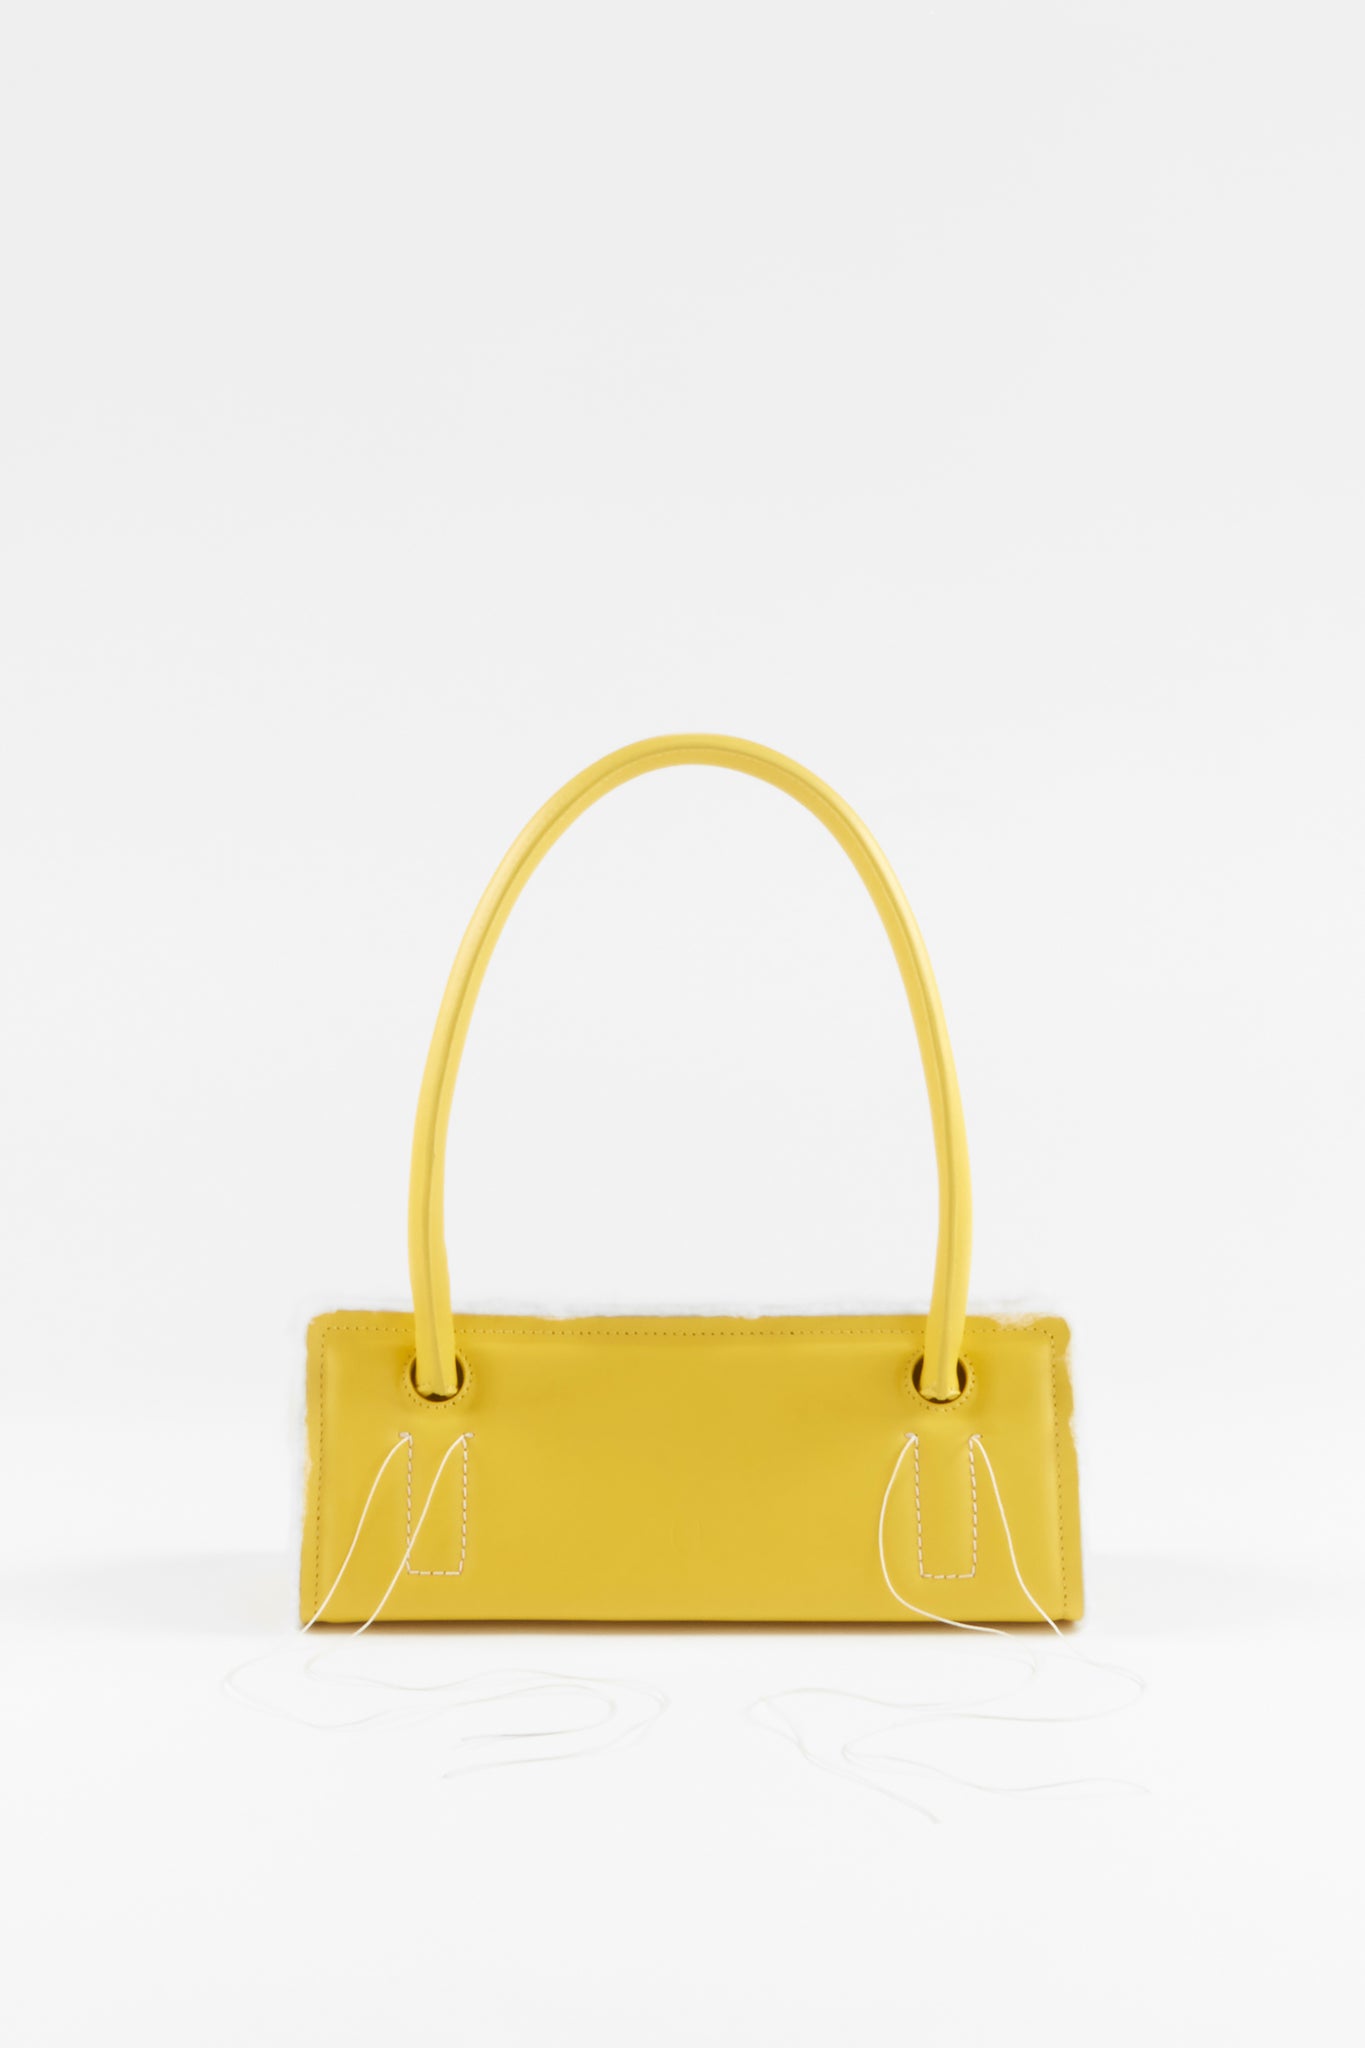 1970s Varon Yellow Snakeskin Exotic Leather Handbag Purse - Ruby Lane